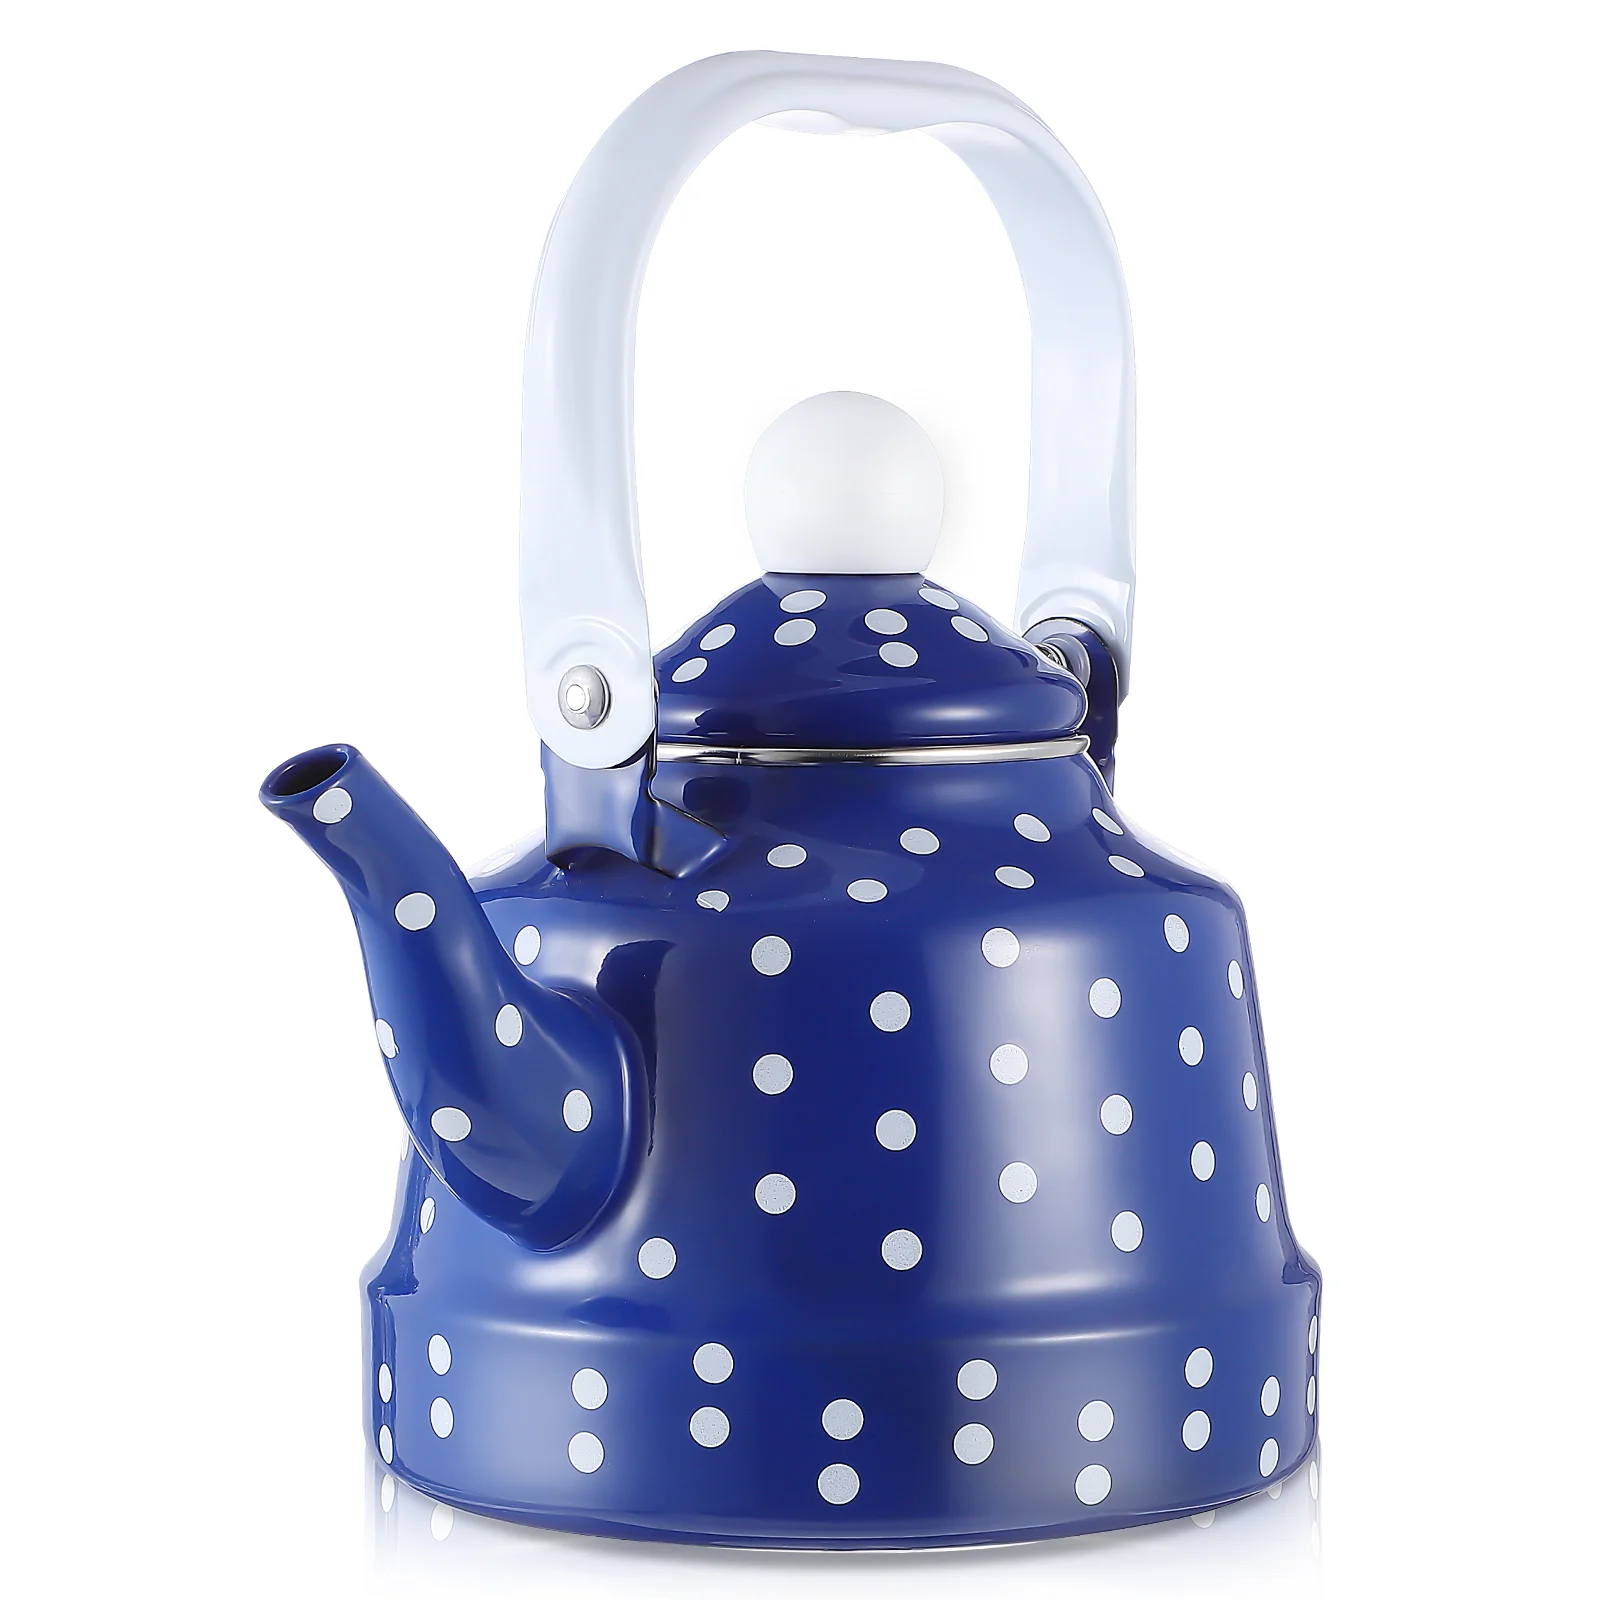 

Ancient Bell Pot Kettle Stovetop Vintage Tea Kettles Whistling Camping Water Jug Old Fashioned Kitchen Enamel Pots Teapots